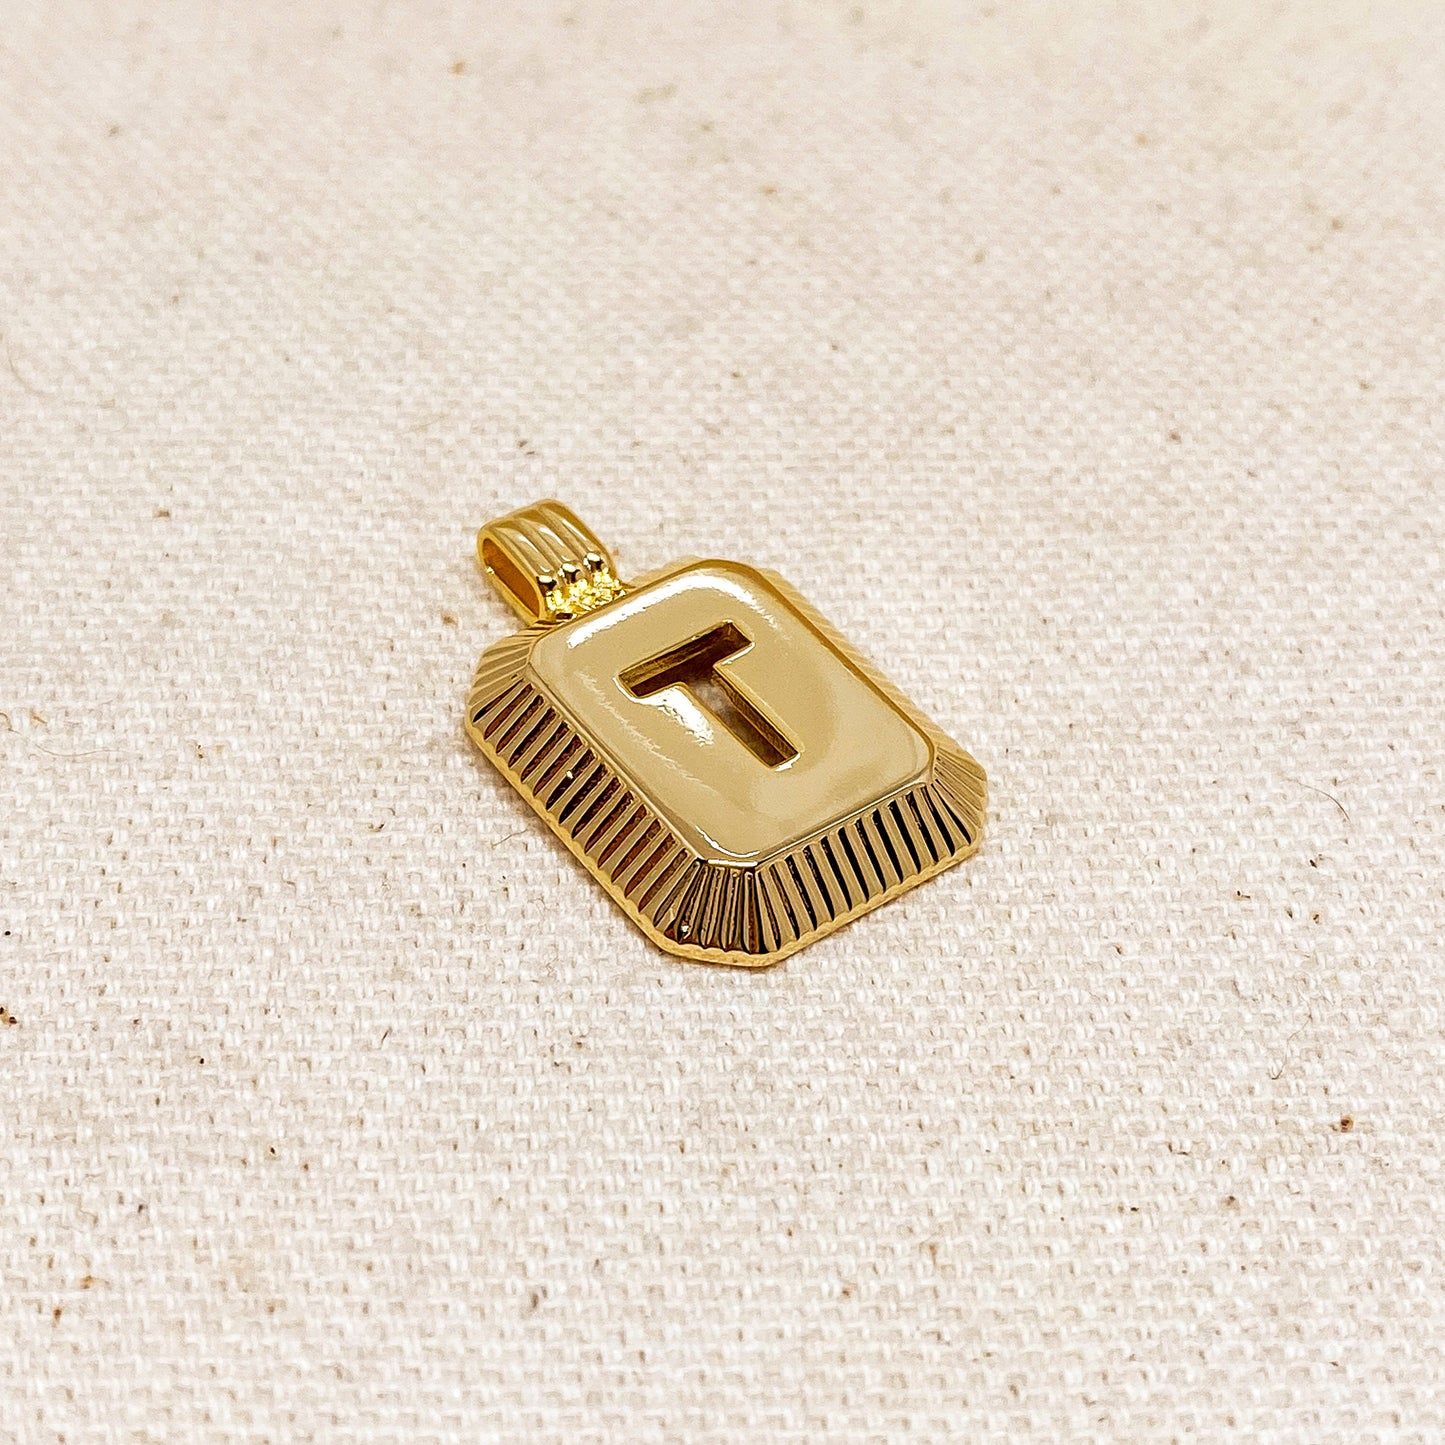 GoldFi 18k Gold Filled Initial Plate Pendant Letter T